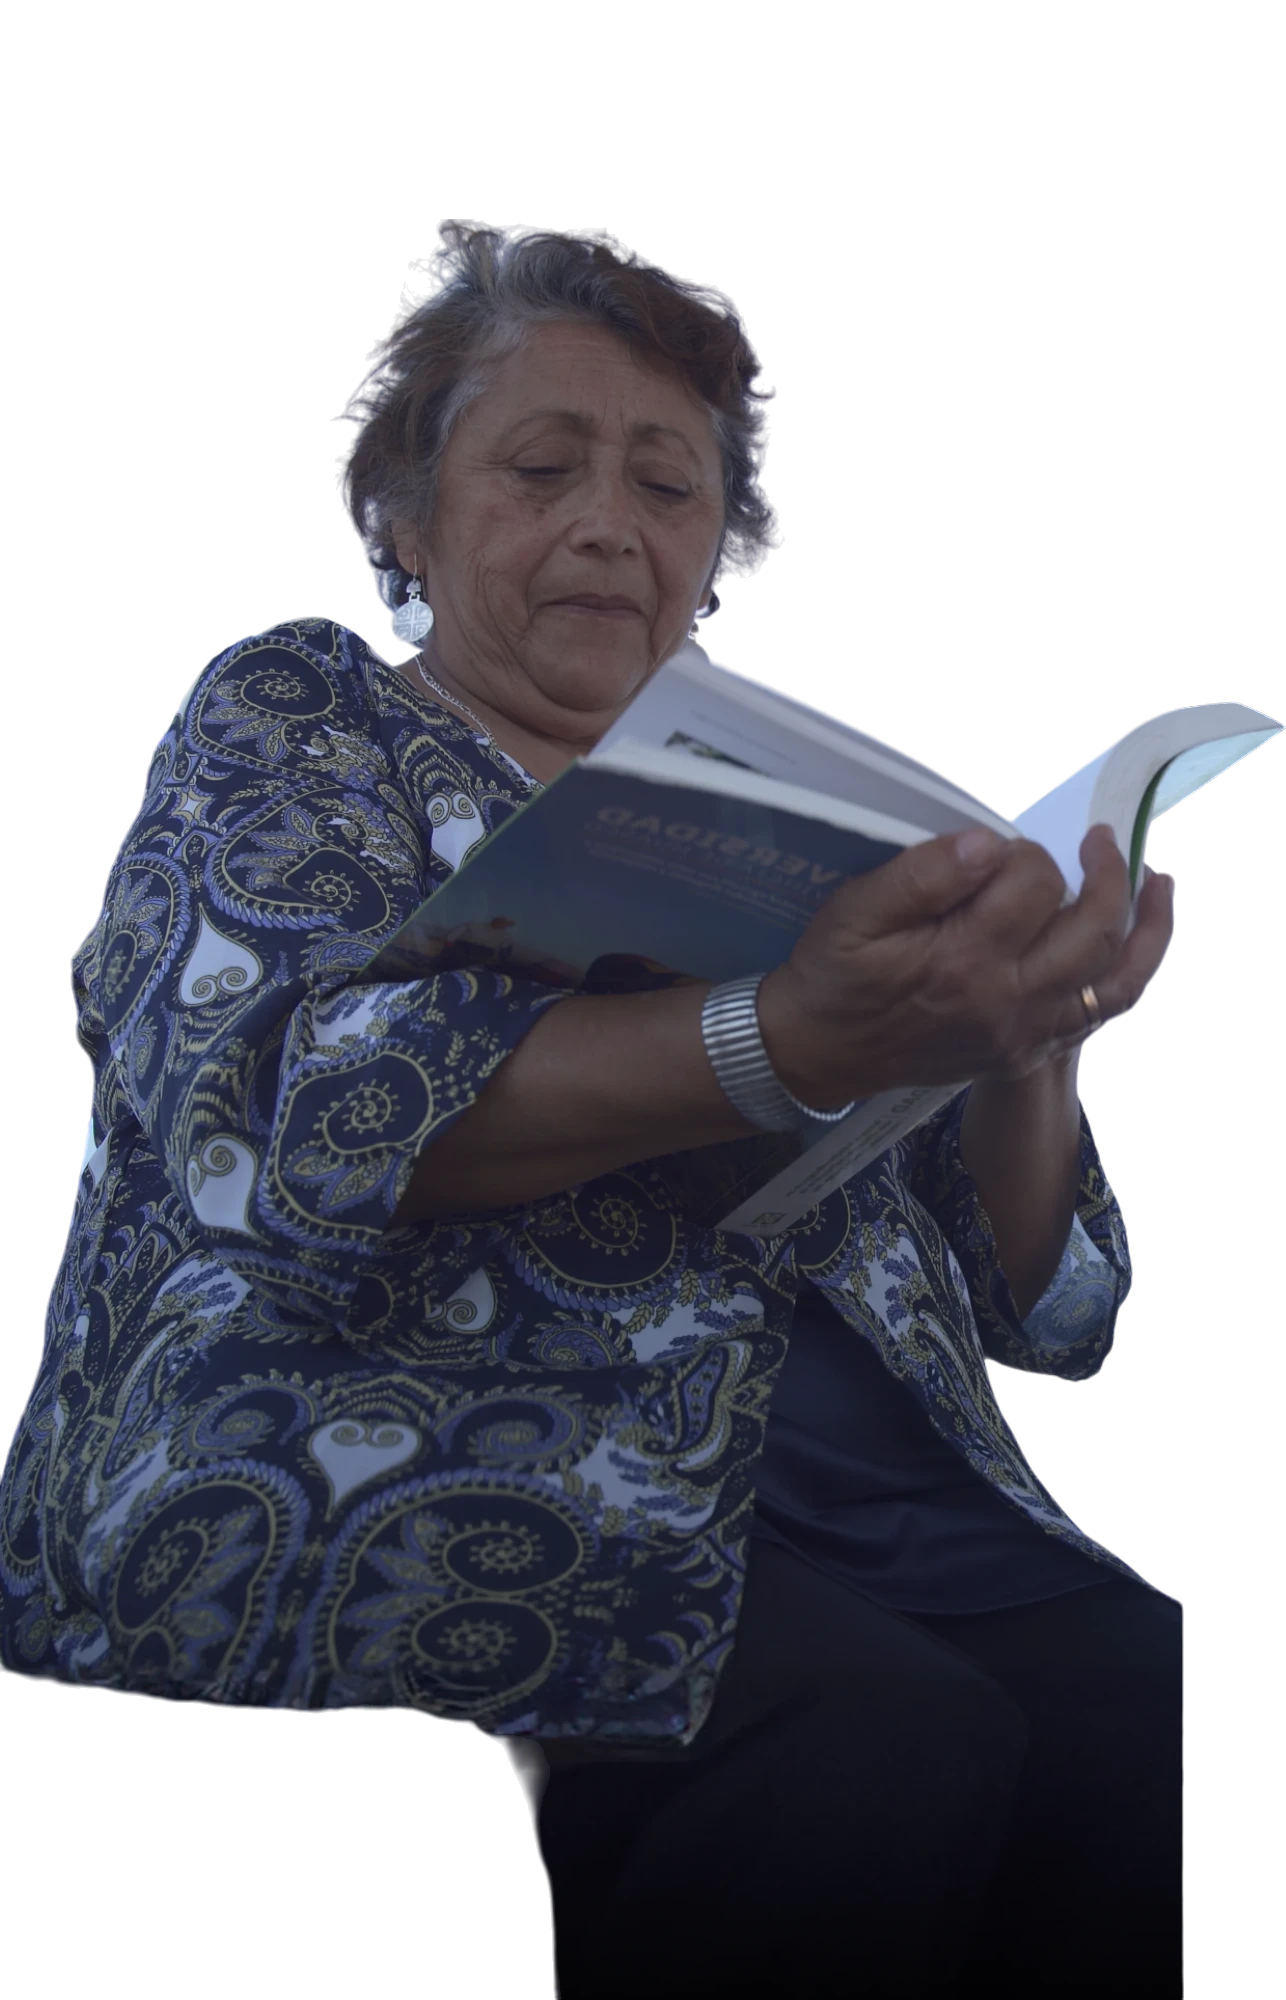 A person reading a book